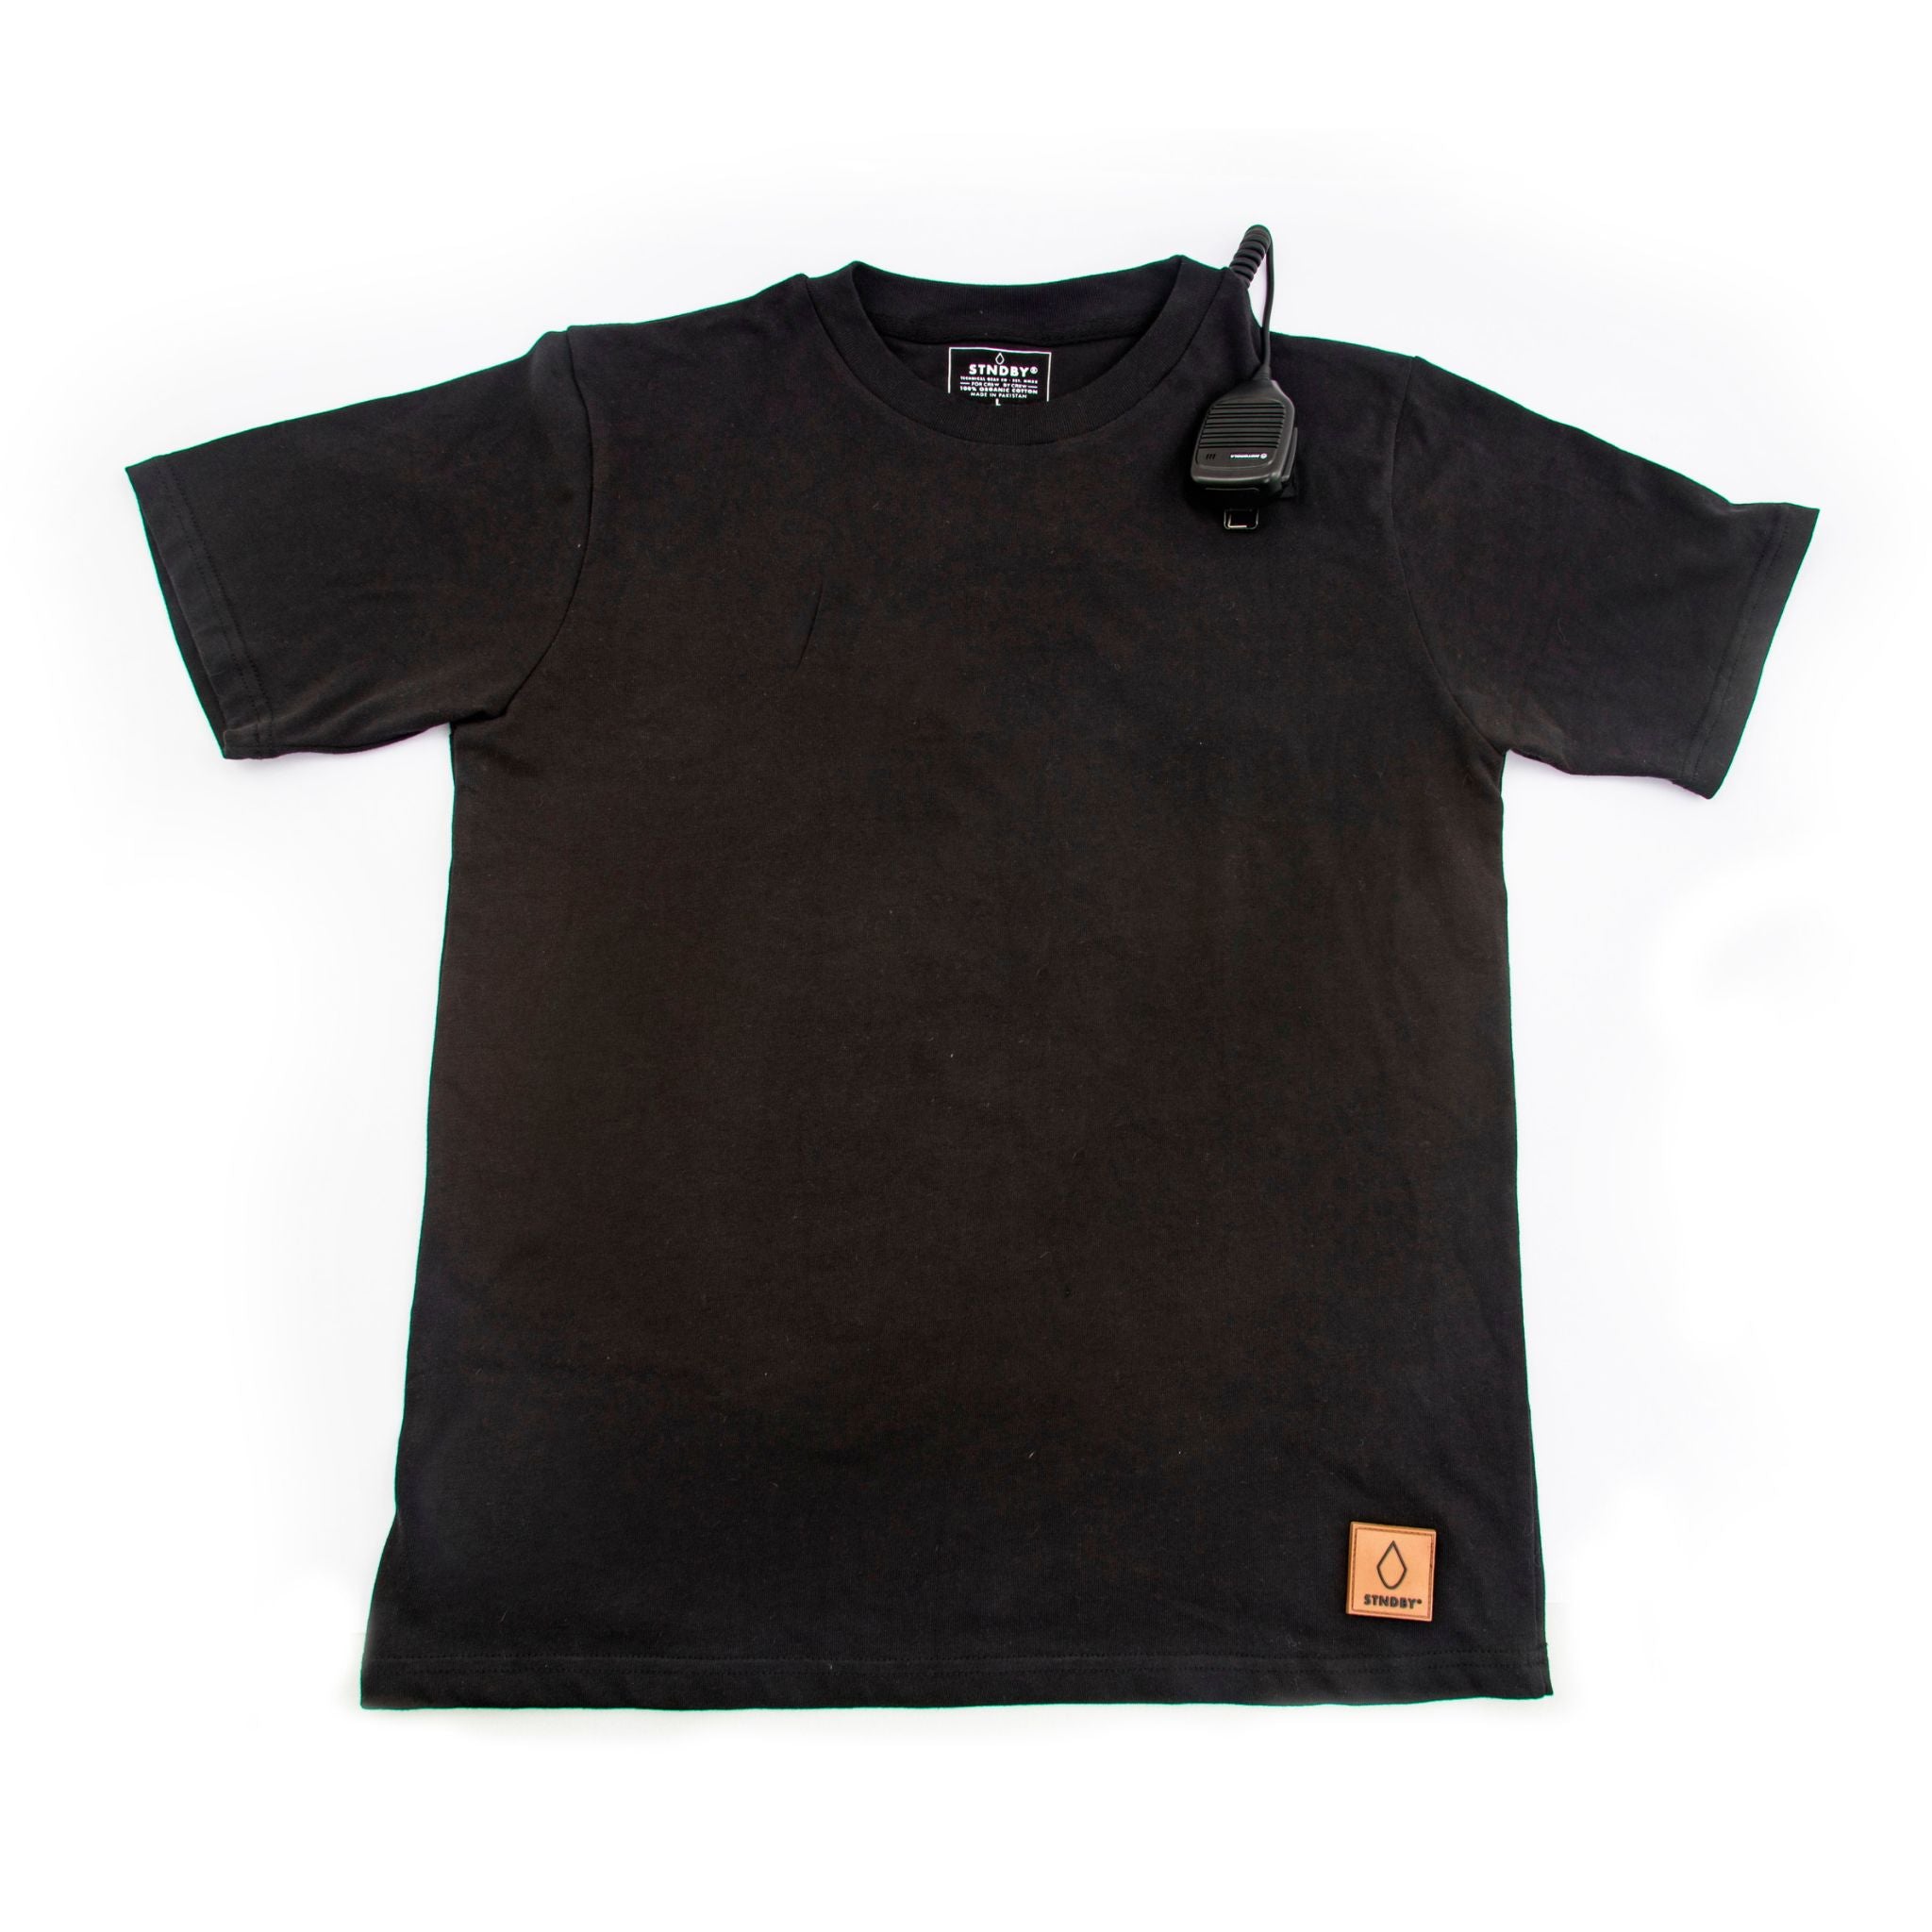 Stage black cotton T-shirt with radio tab